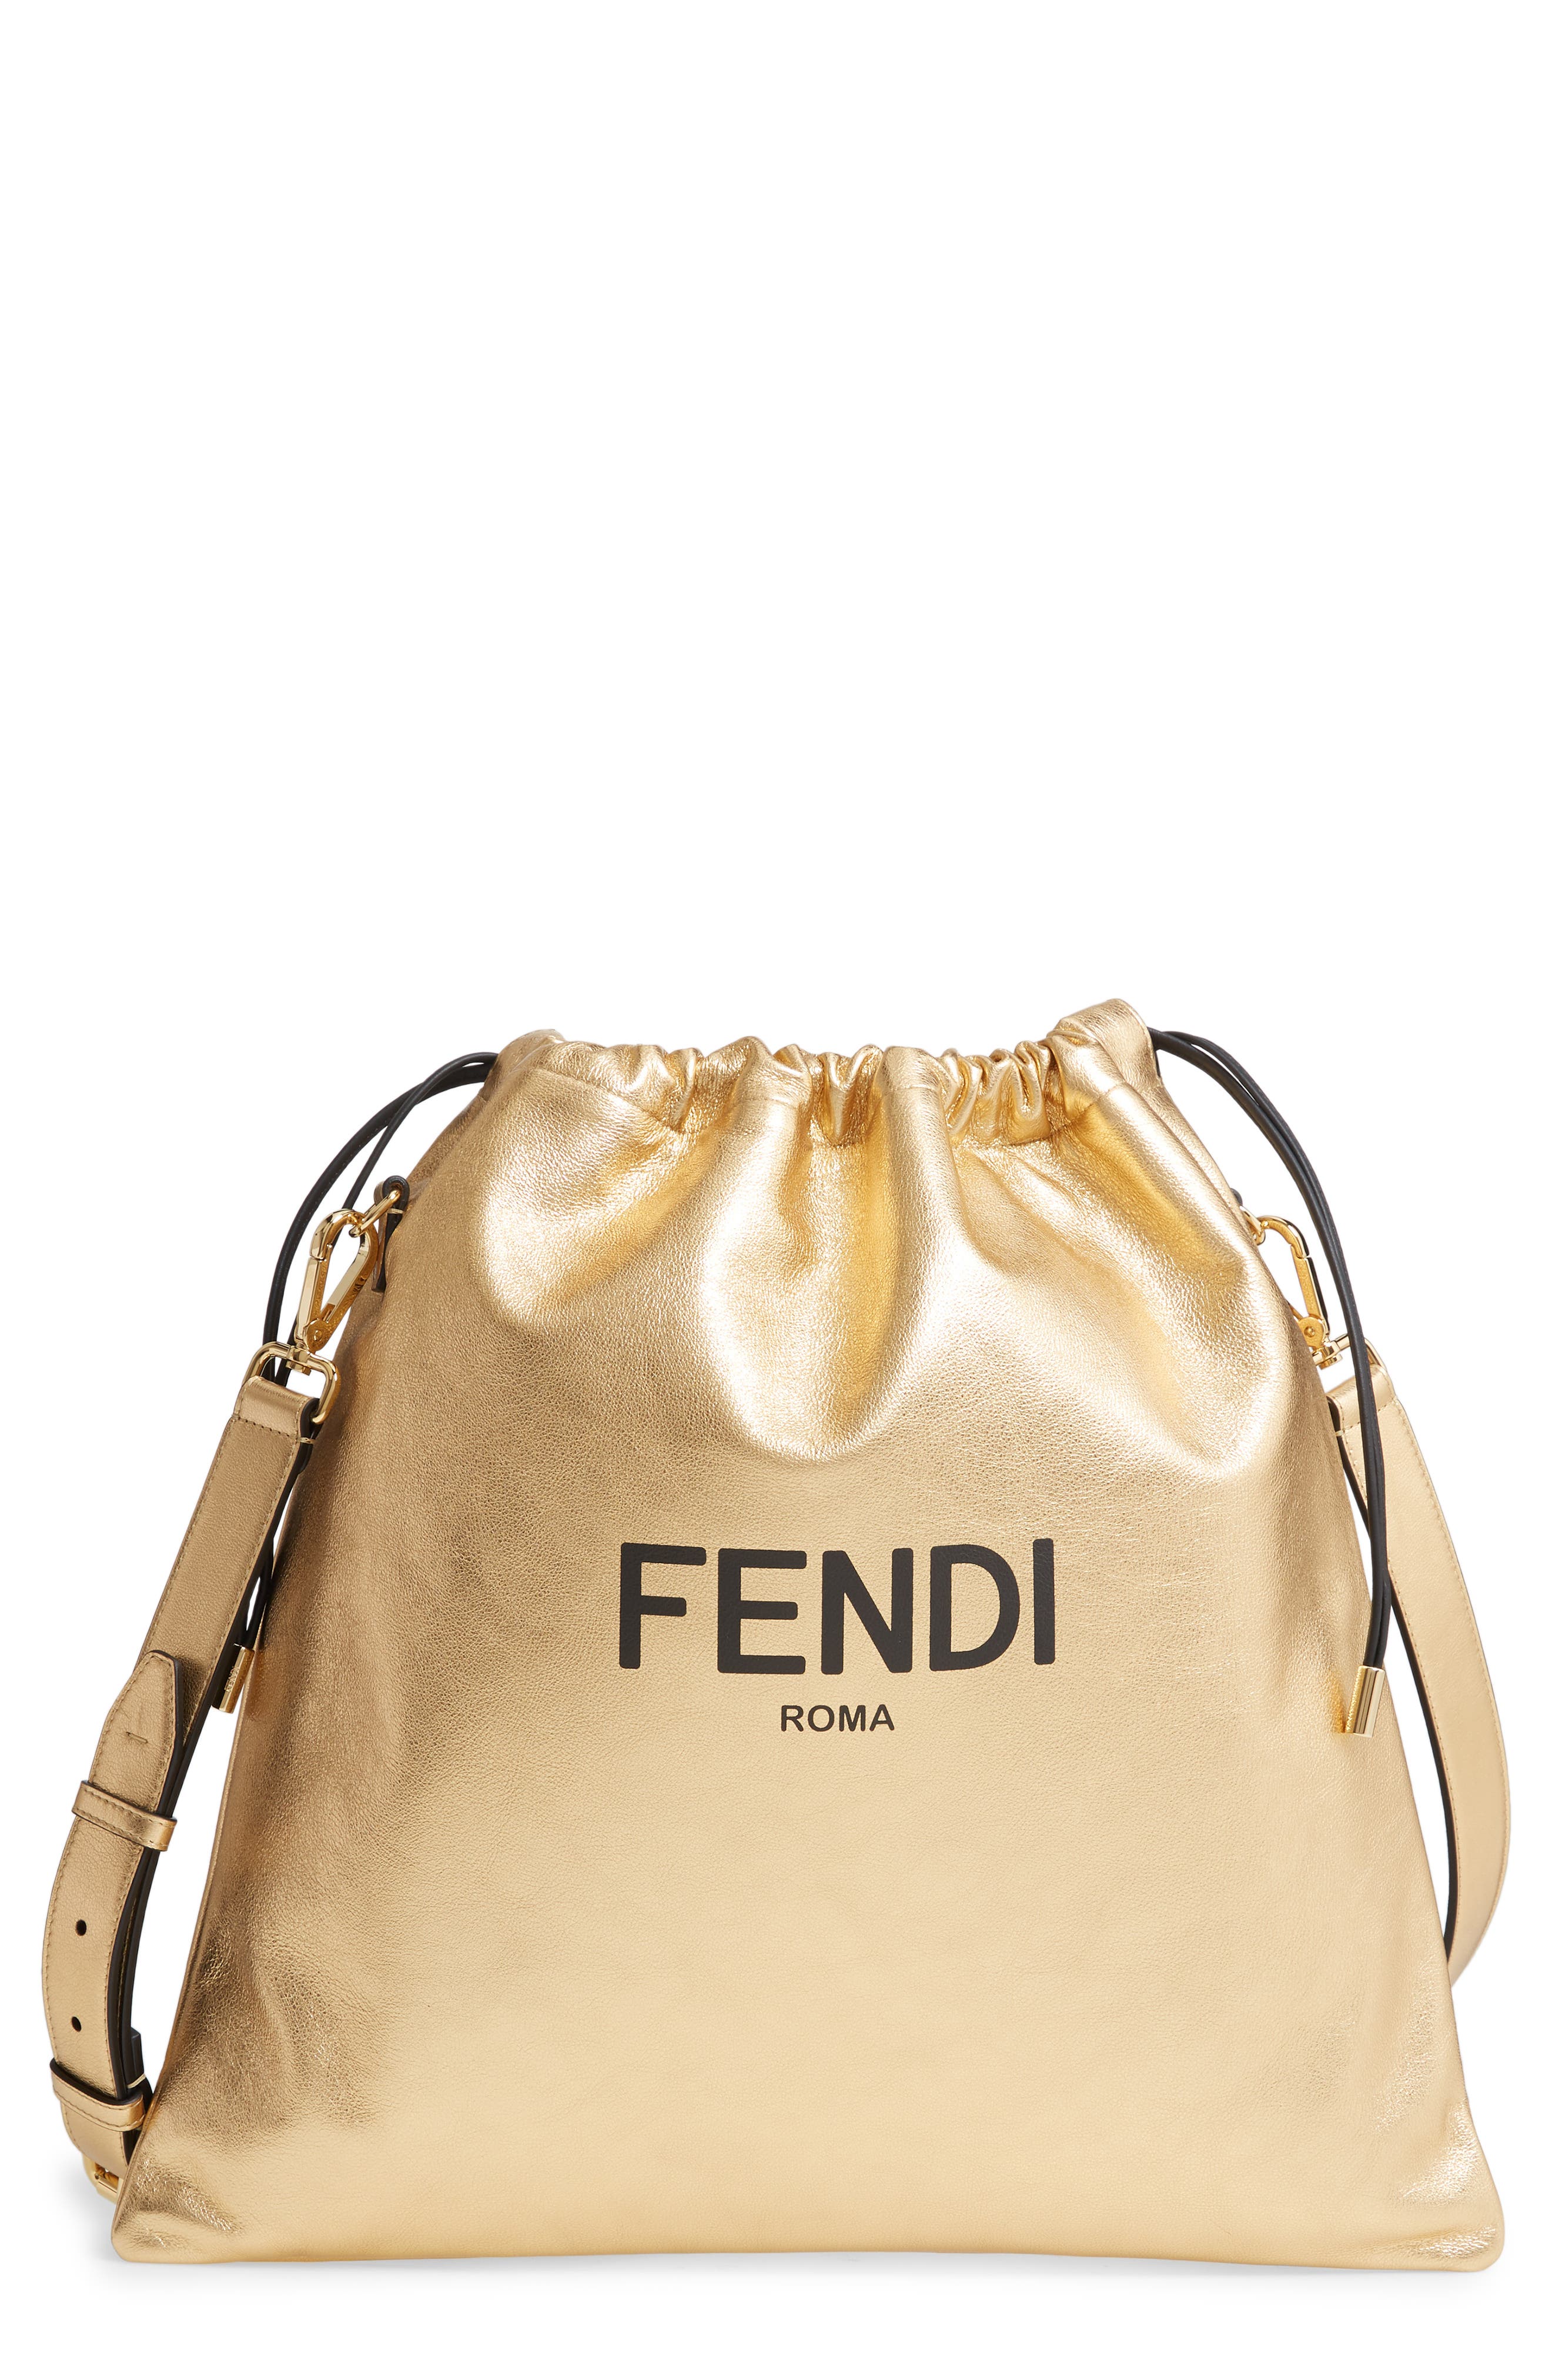 fendi women's handbags